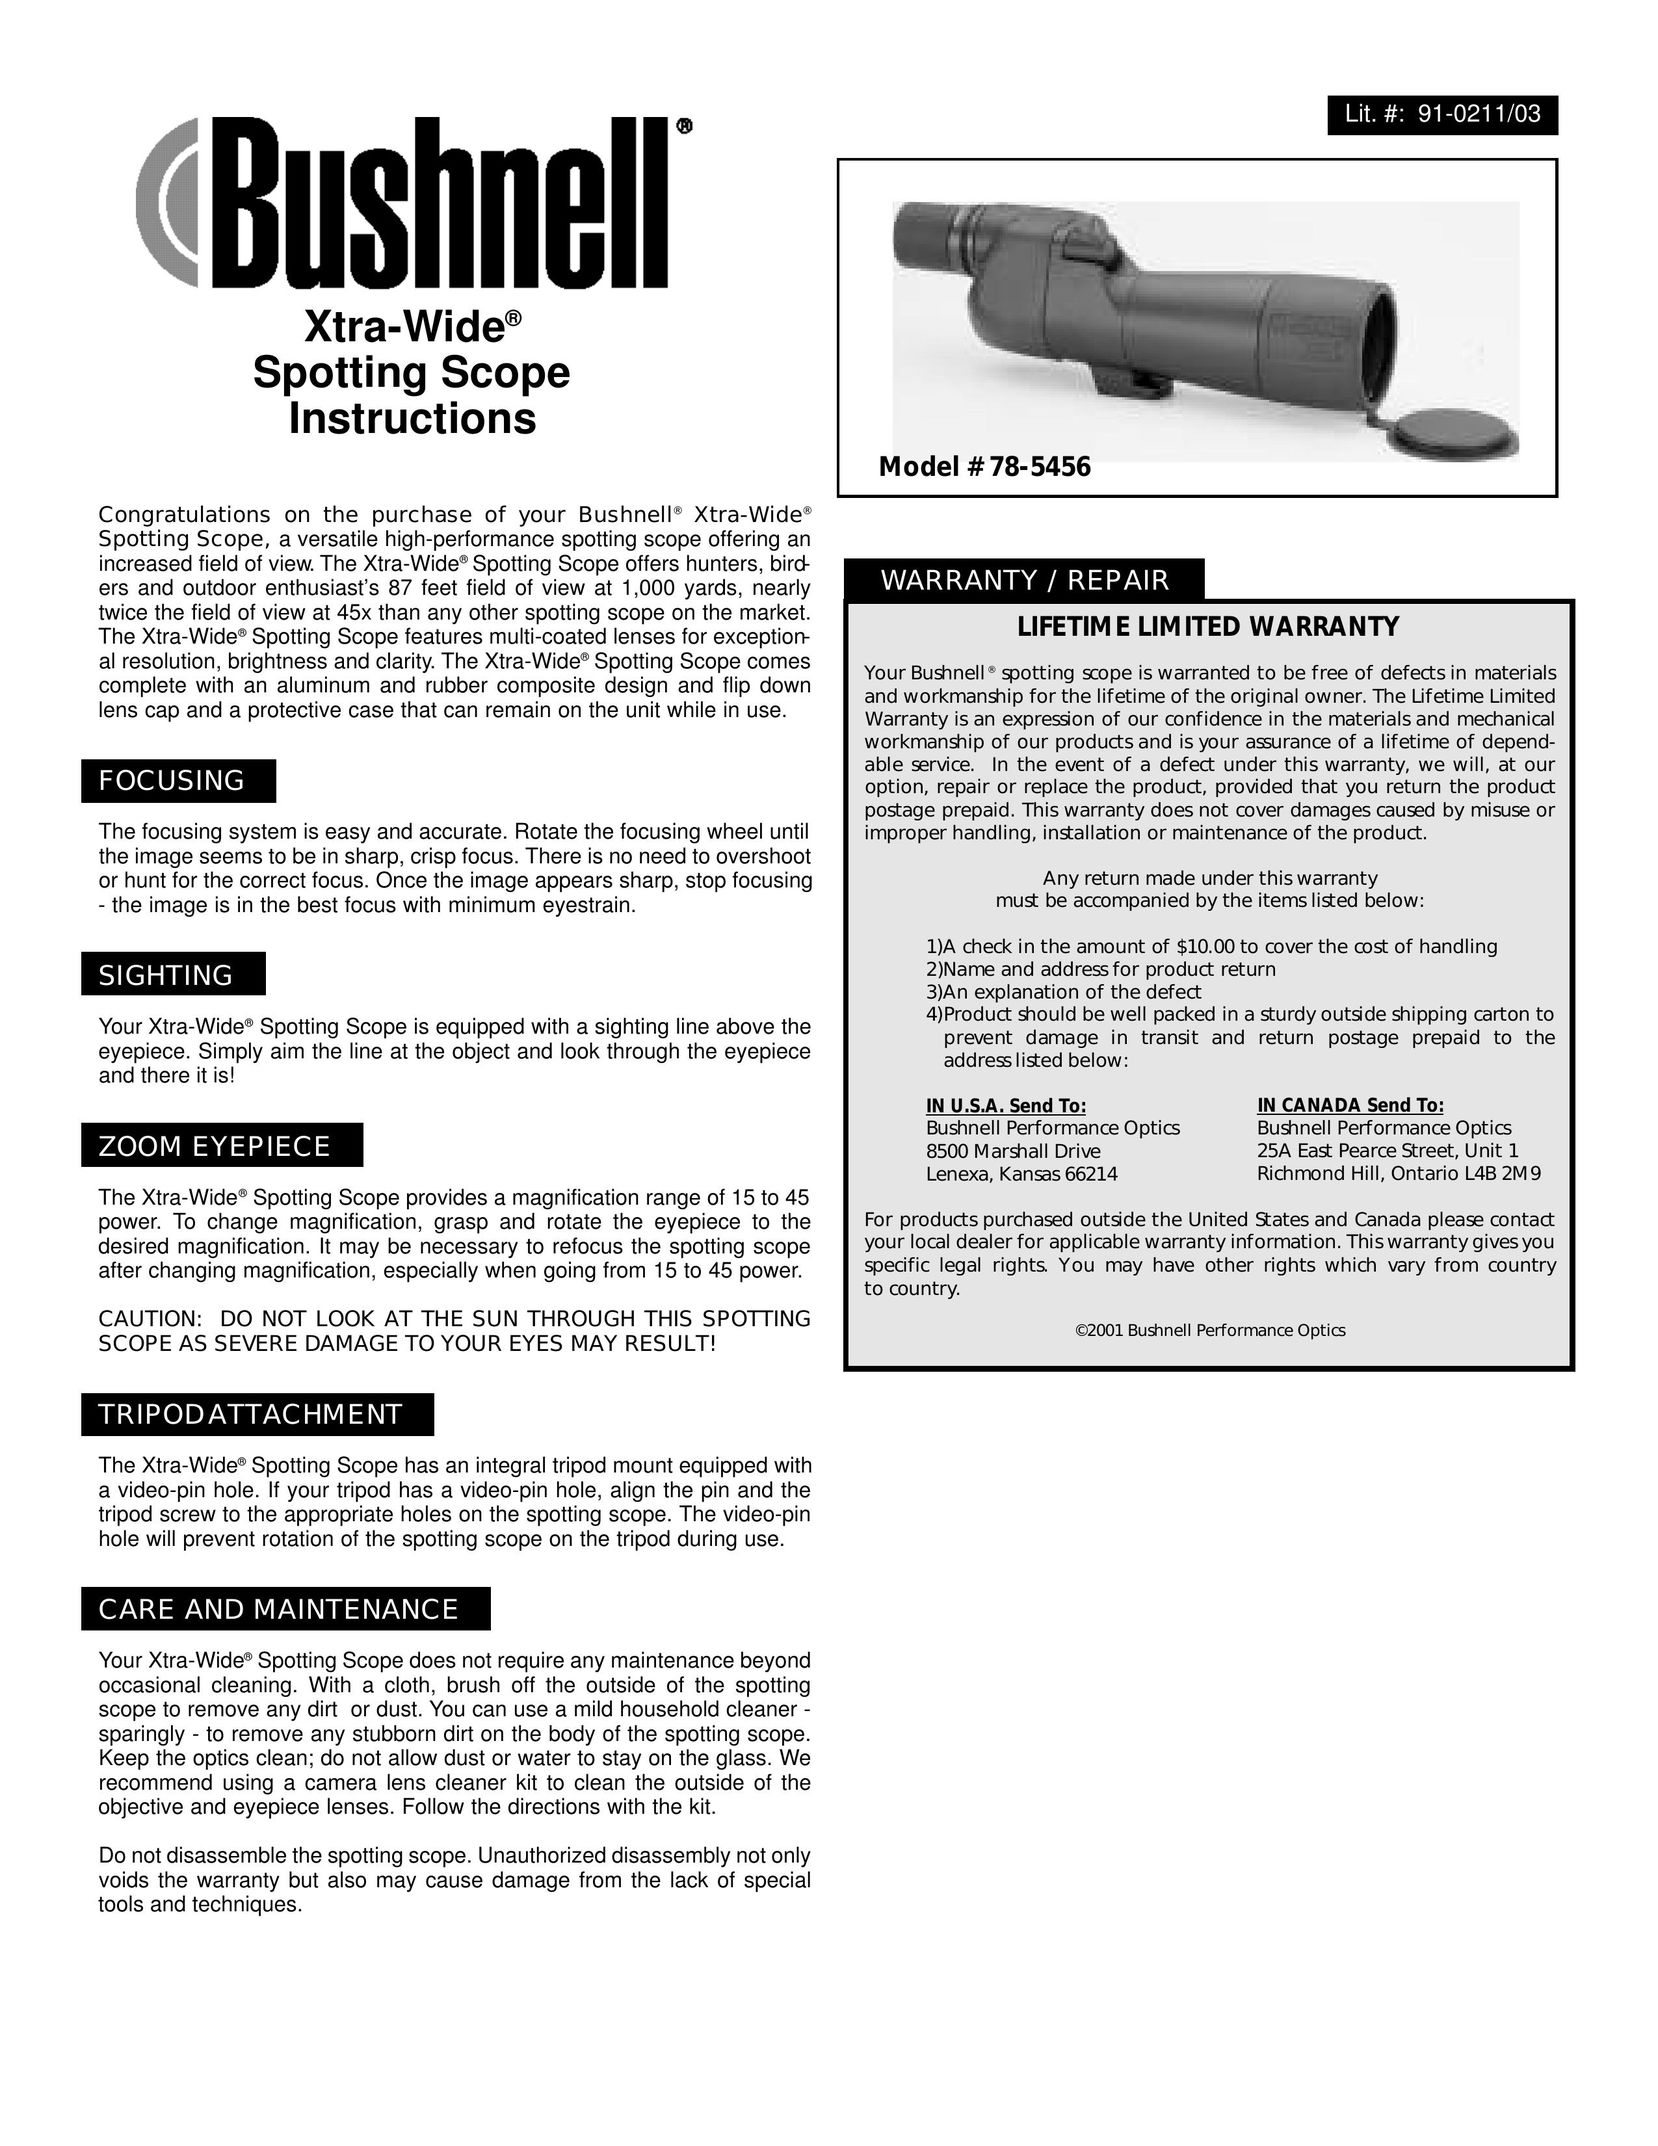 Bushnell 78-5456 Mixer User Manual